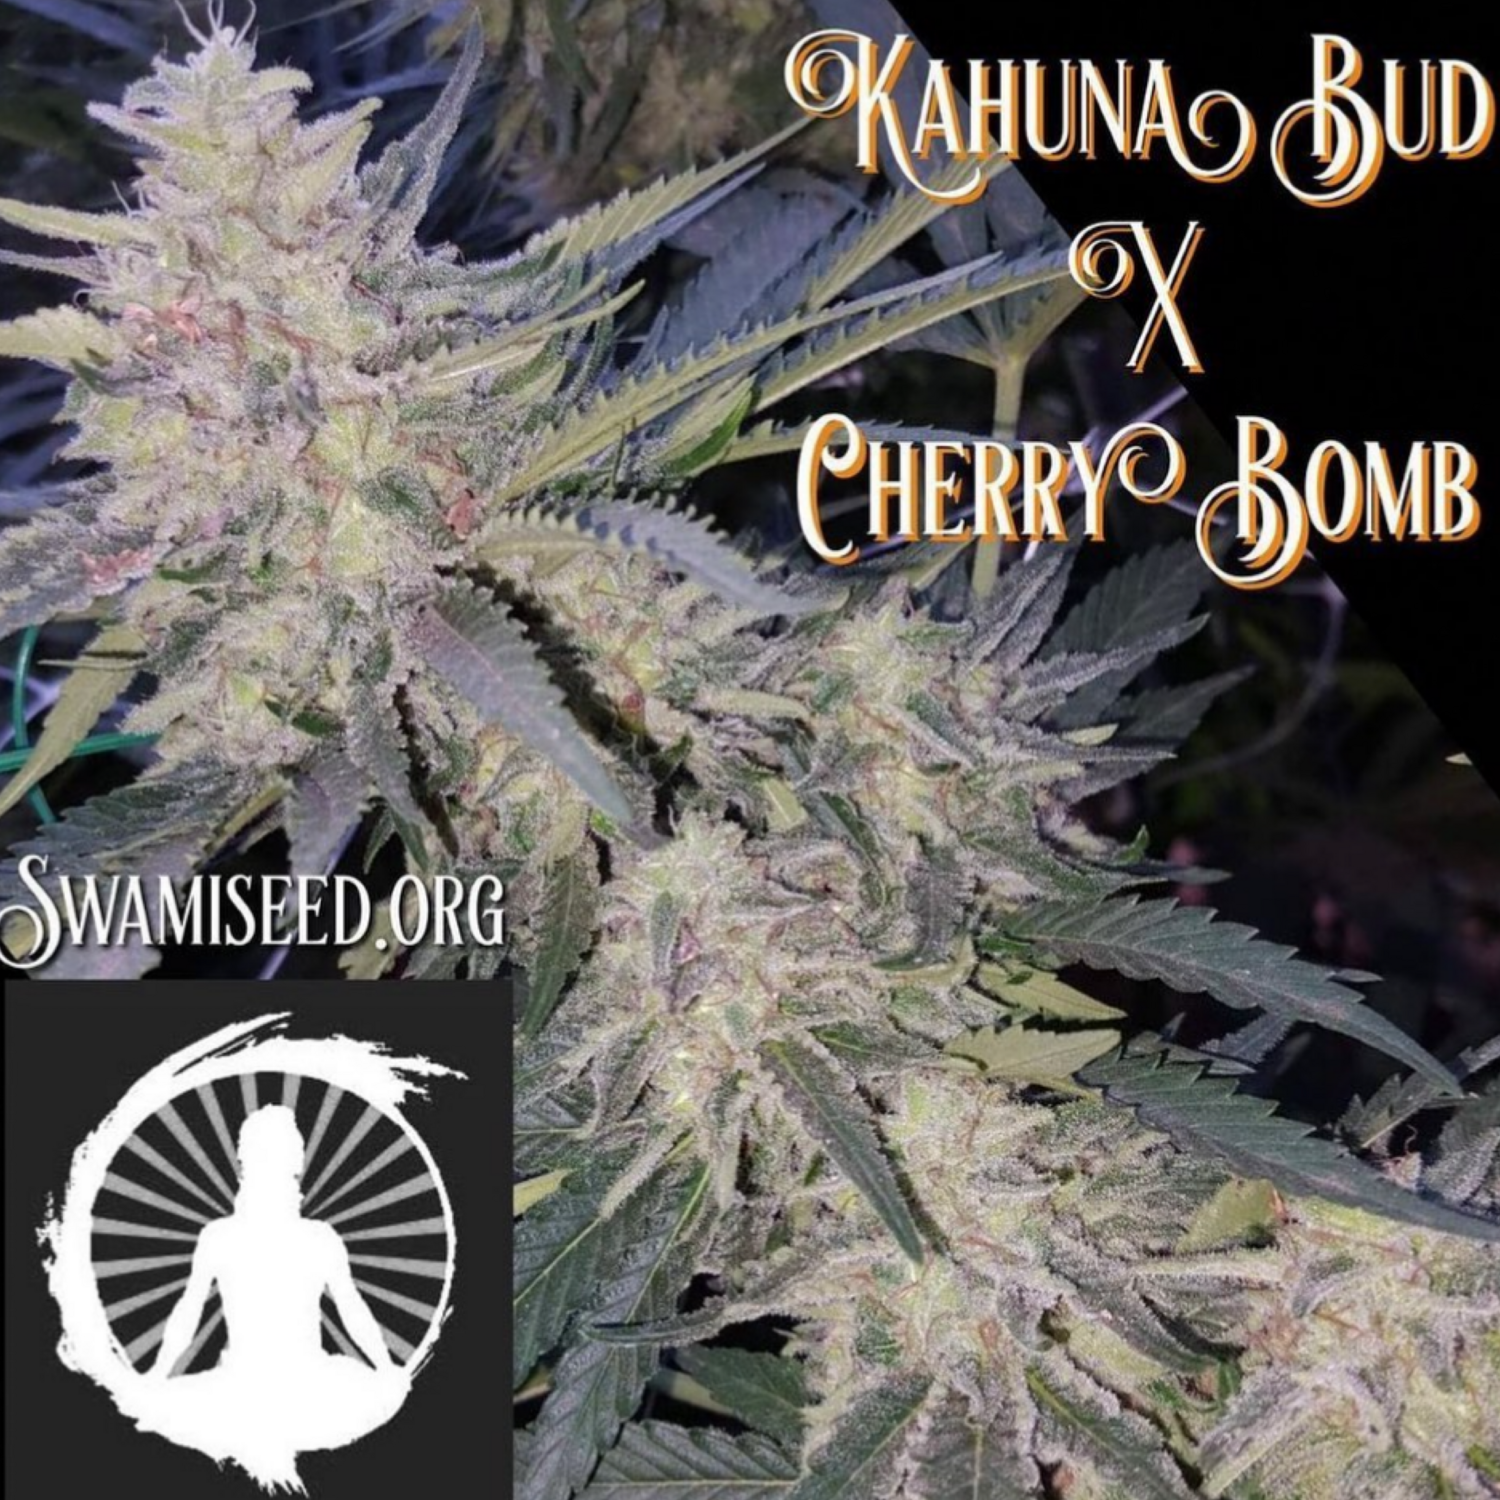 Kahuna Bud x Cherry Bomb